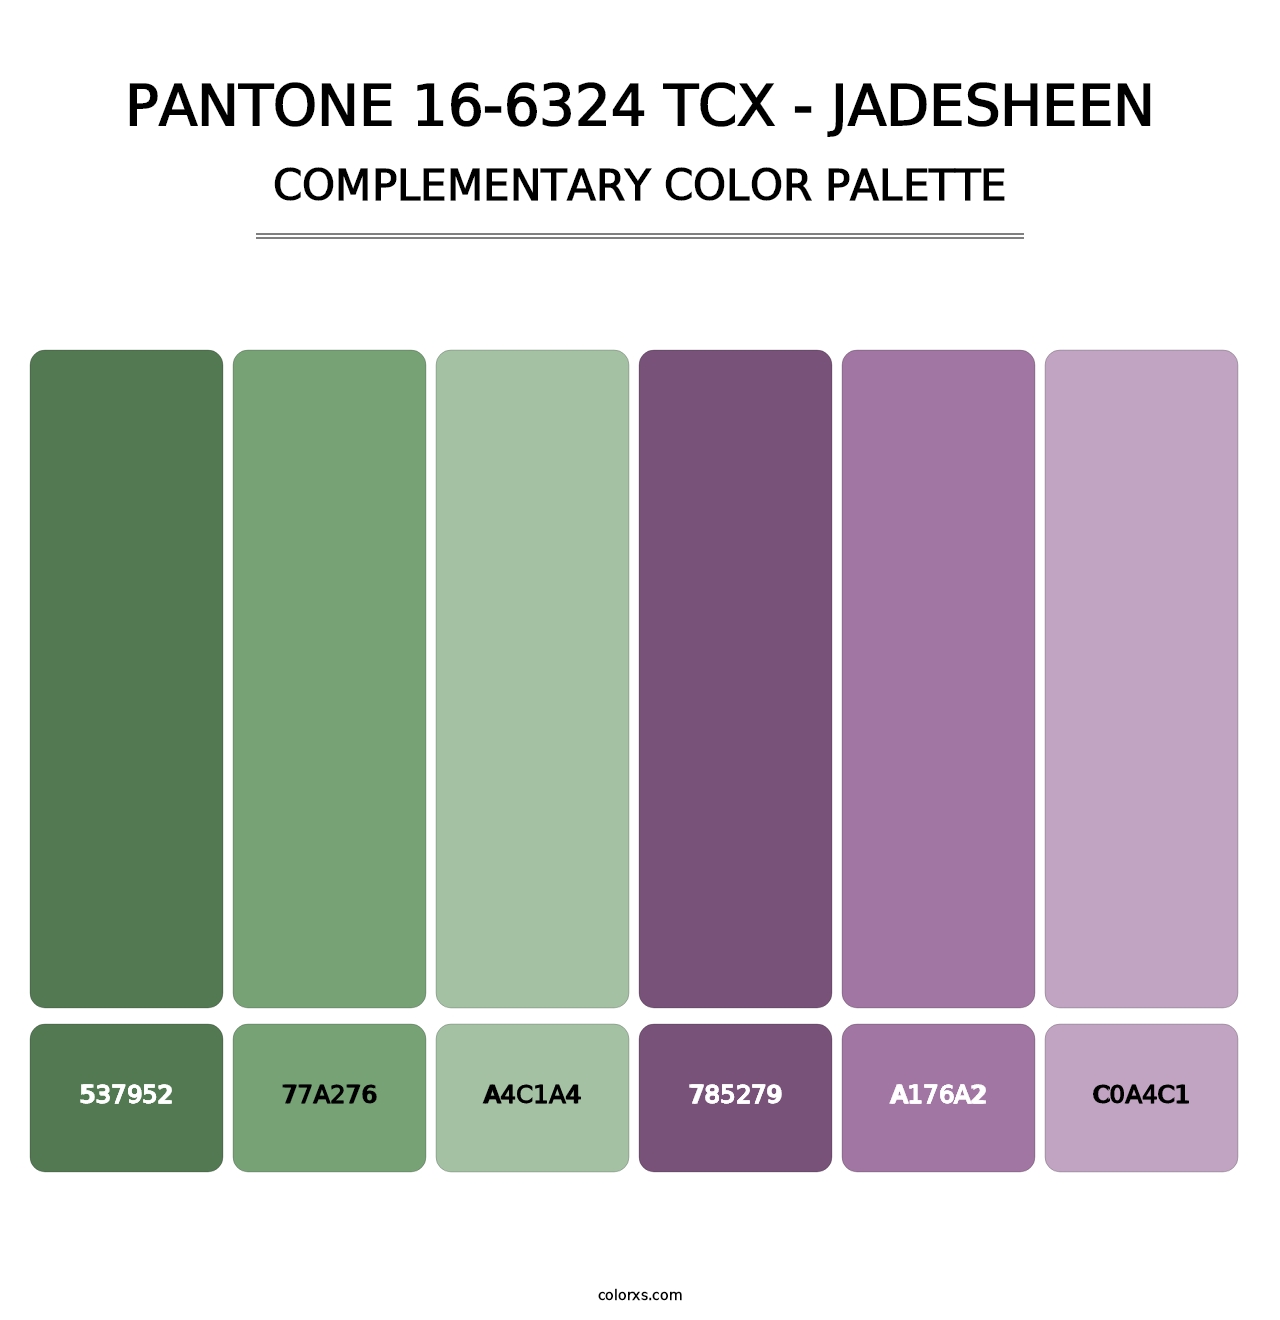 PANTONE 16-6324 TCX - Jadesheen - Complementary Color Palette